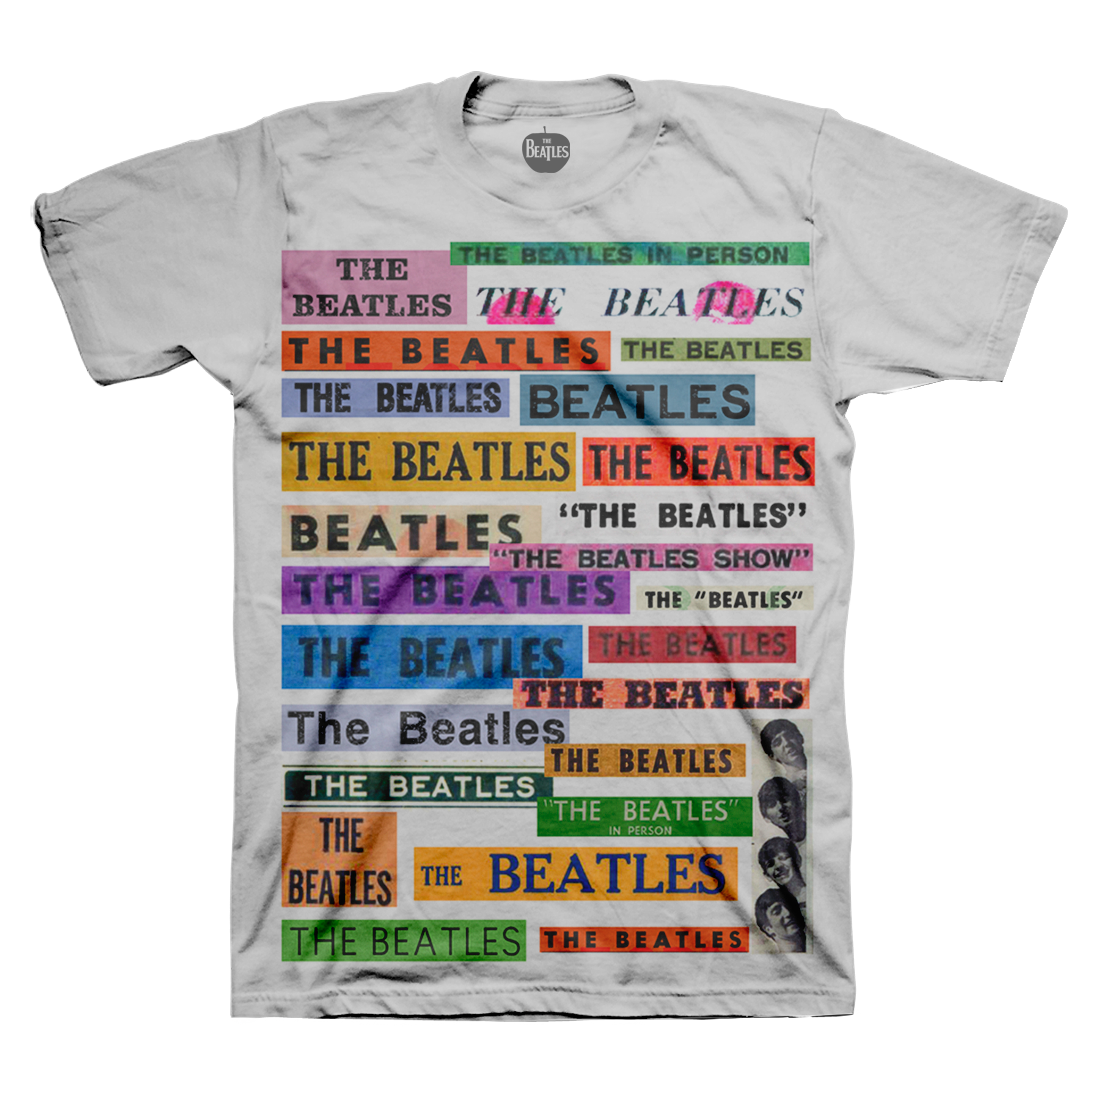 the beatles merchandise t-shirts